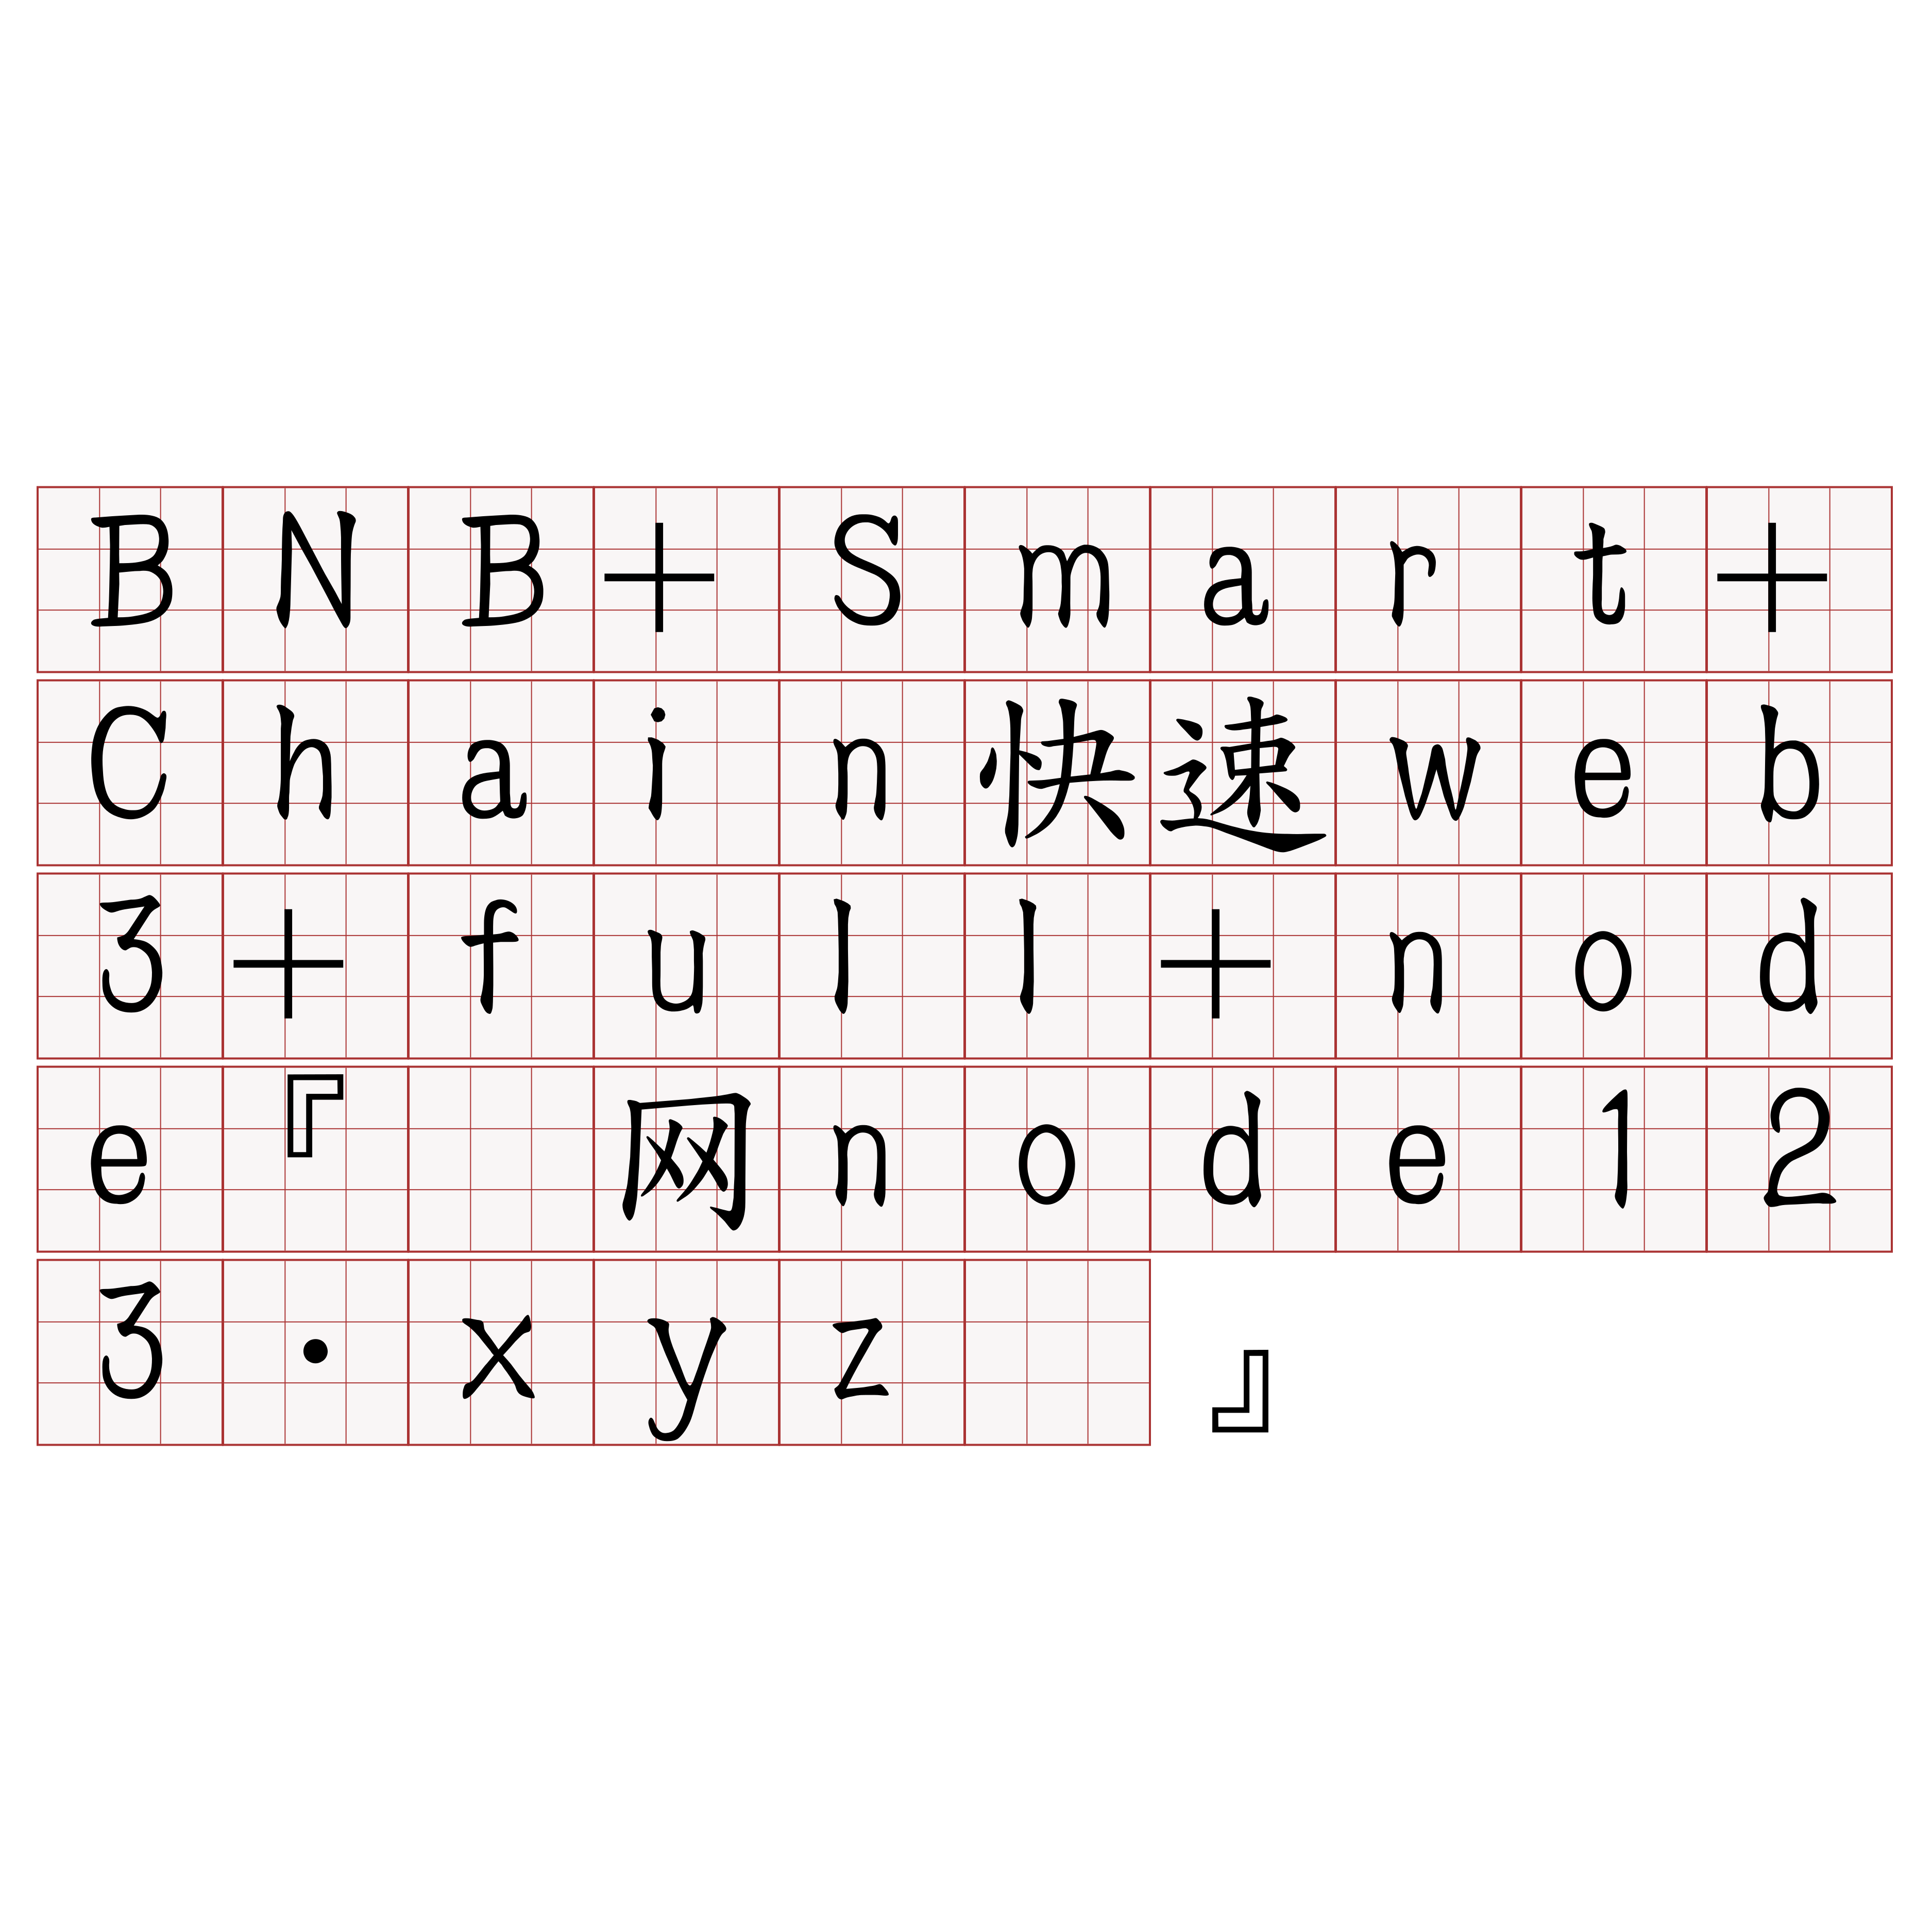 BNB+Smart+Chain快速web3+full+node『🍀官网node123·xyz🍀』】胚谅胆rz